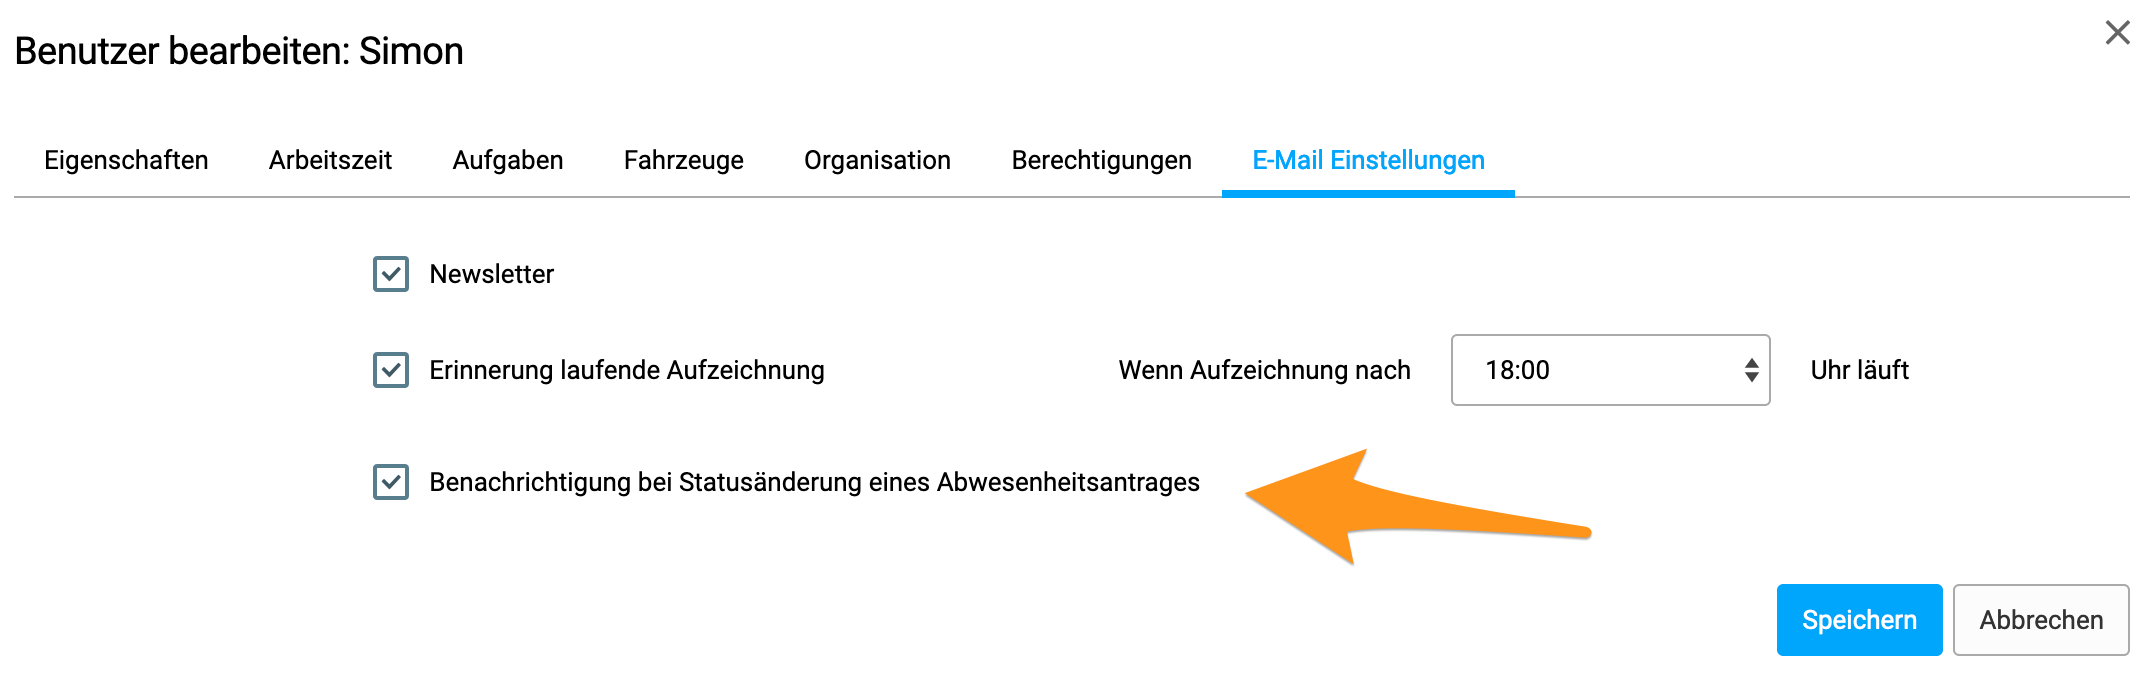 email_konfig_user_admin_de.png